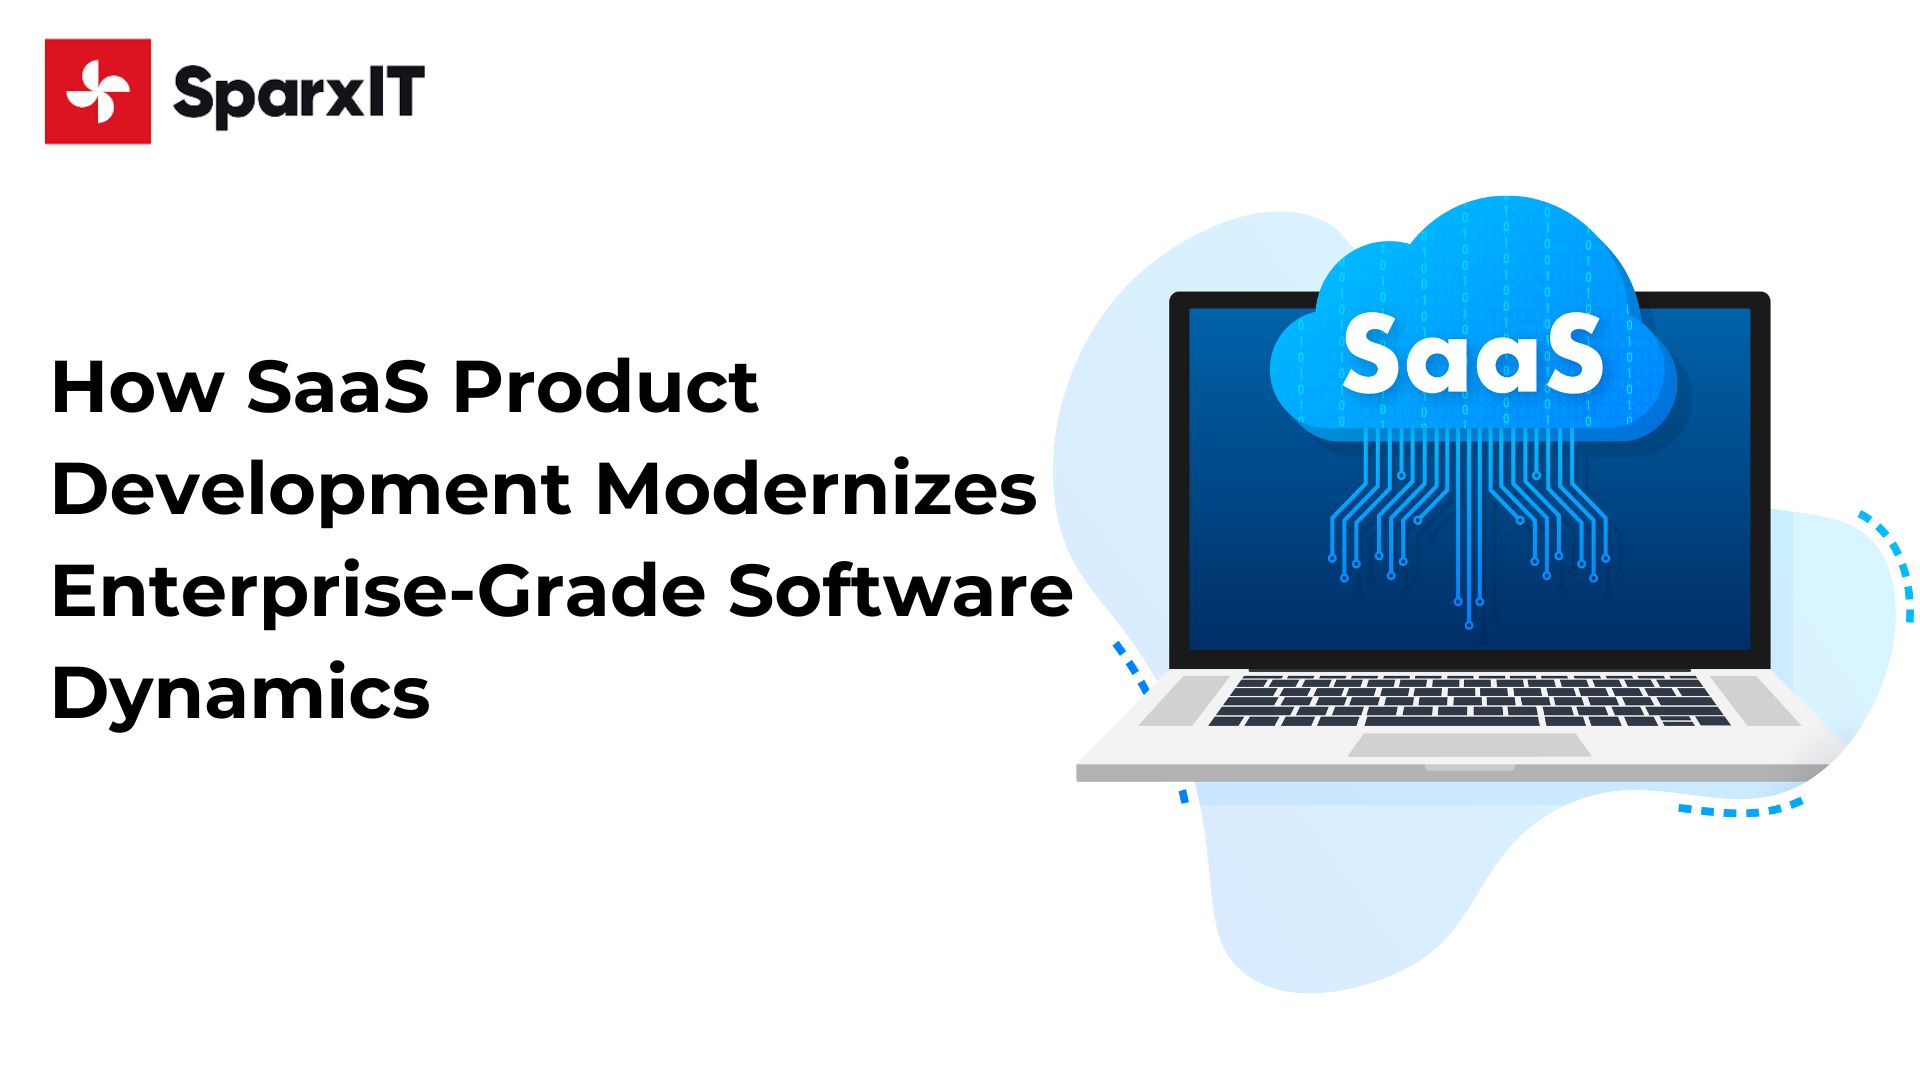 How SaaS Product Development Modernizes Enterprise-Grade Software Dynamics